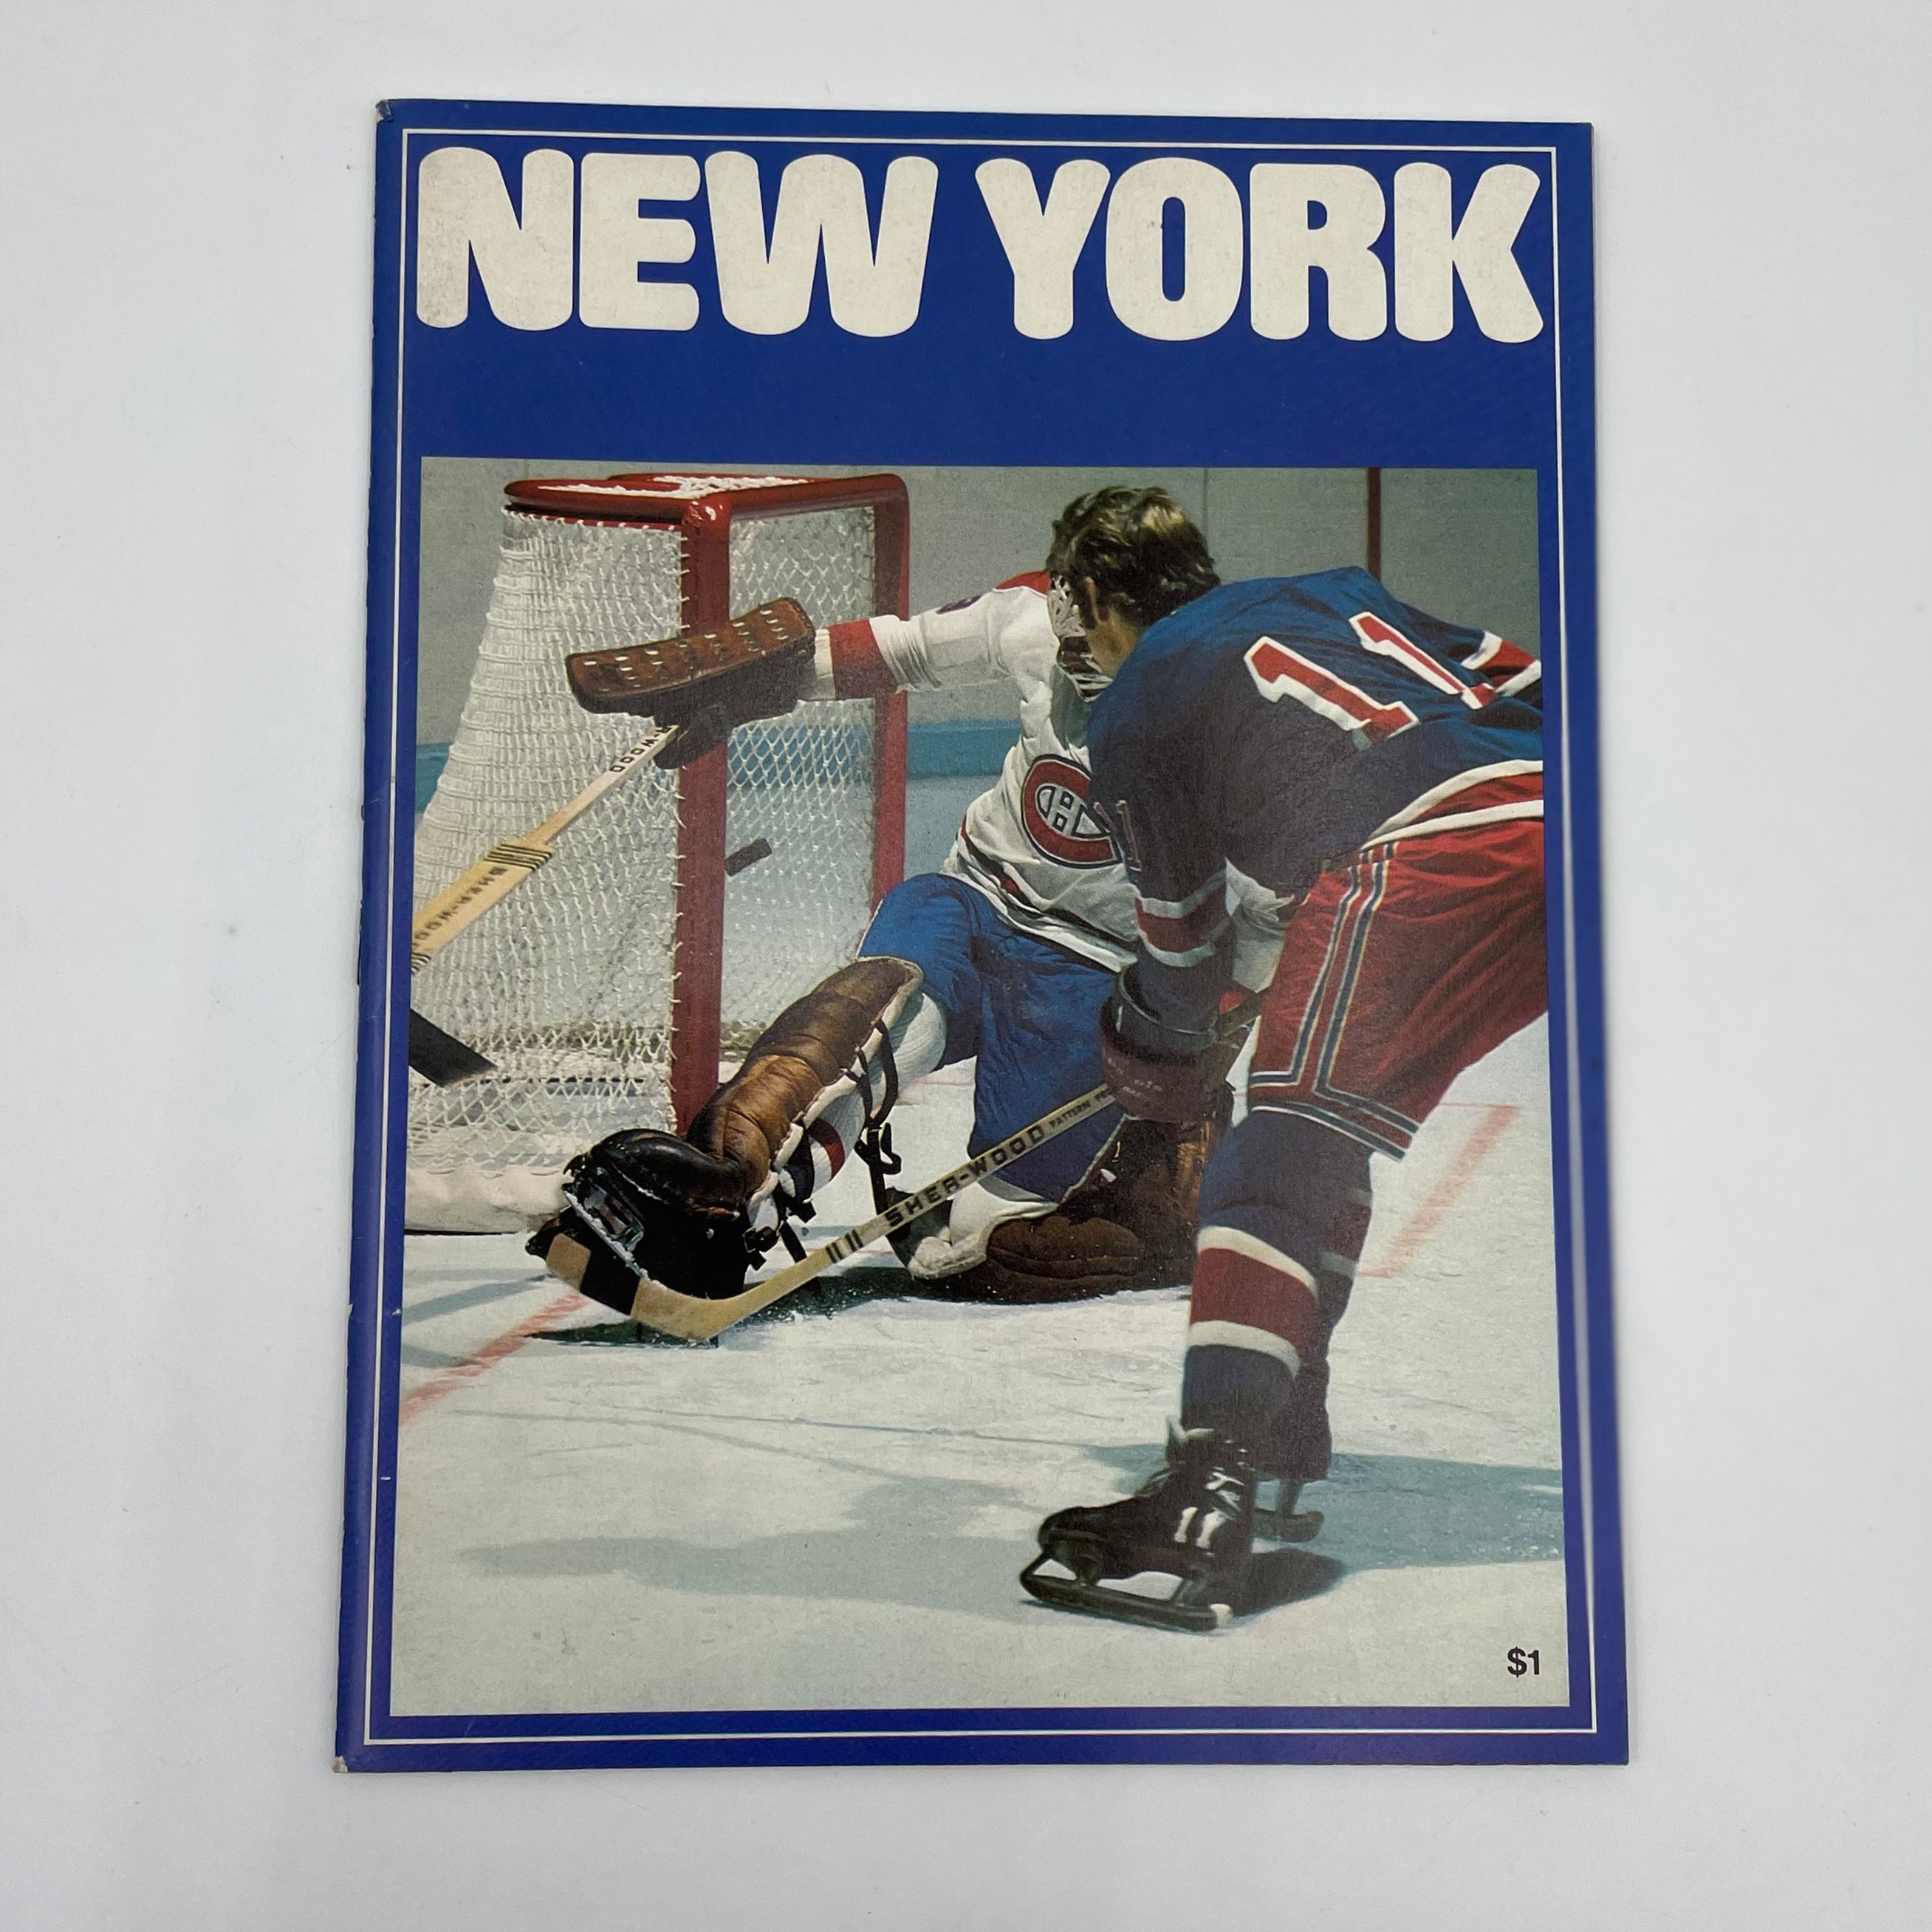 Set of 4 Vintage Hockey Yearbooks